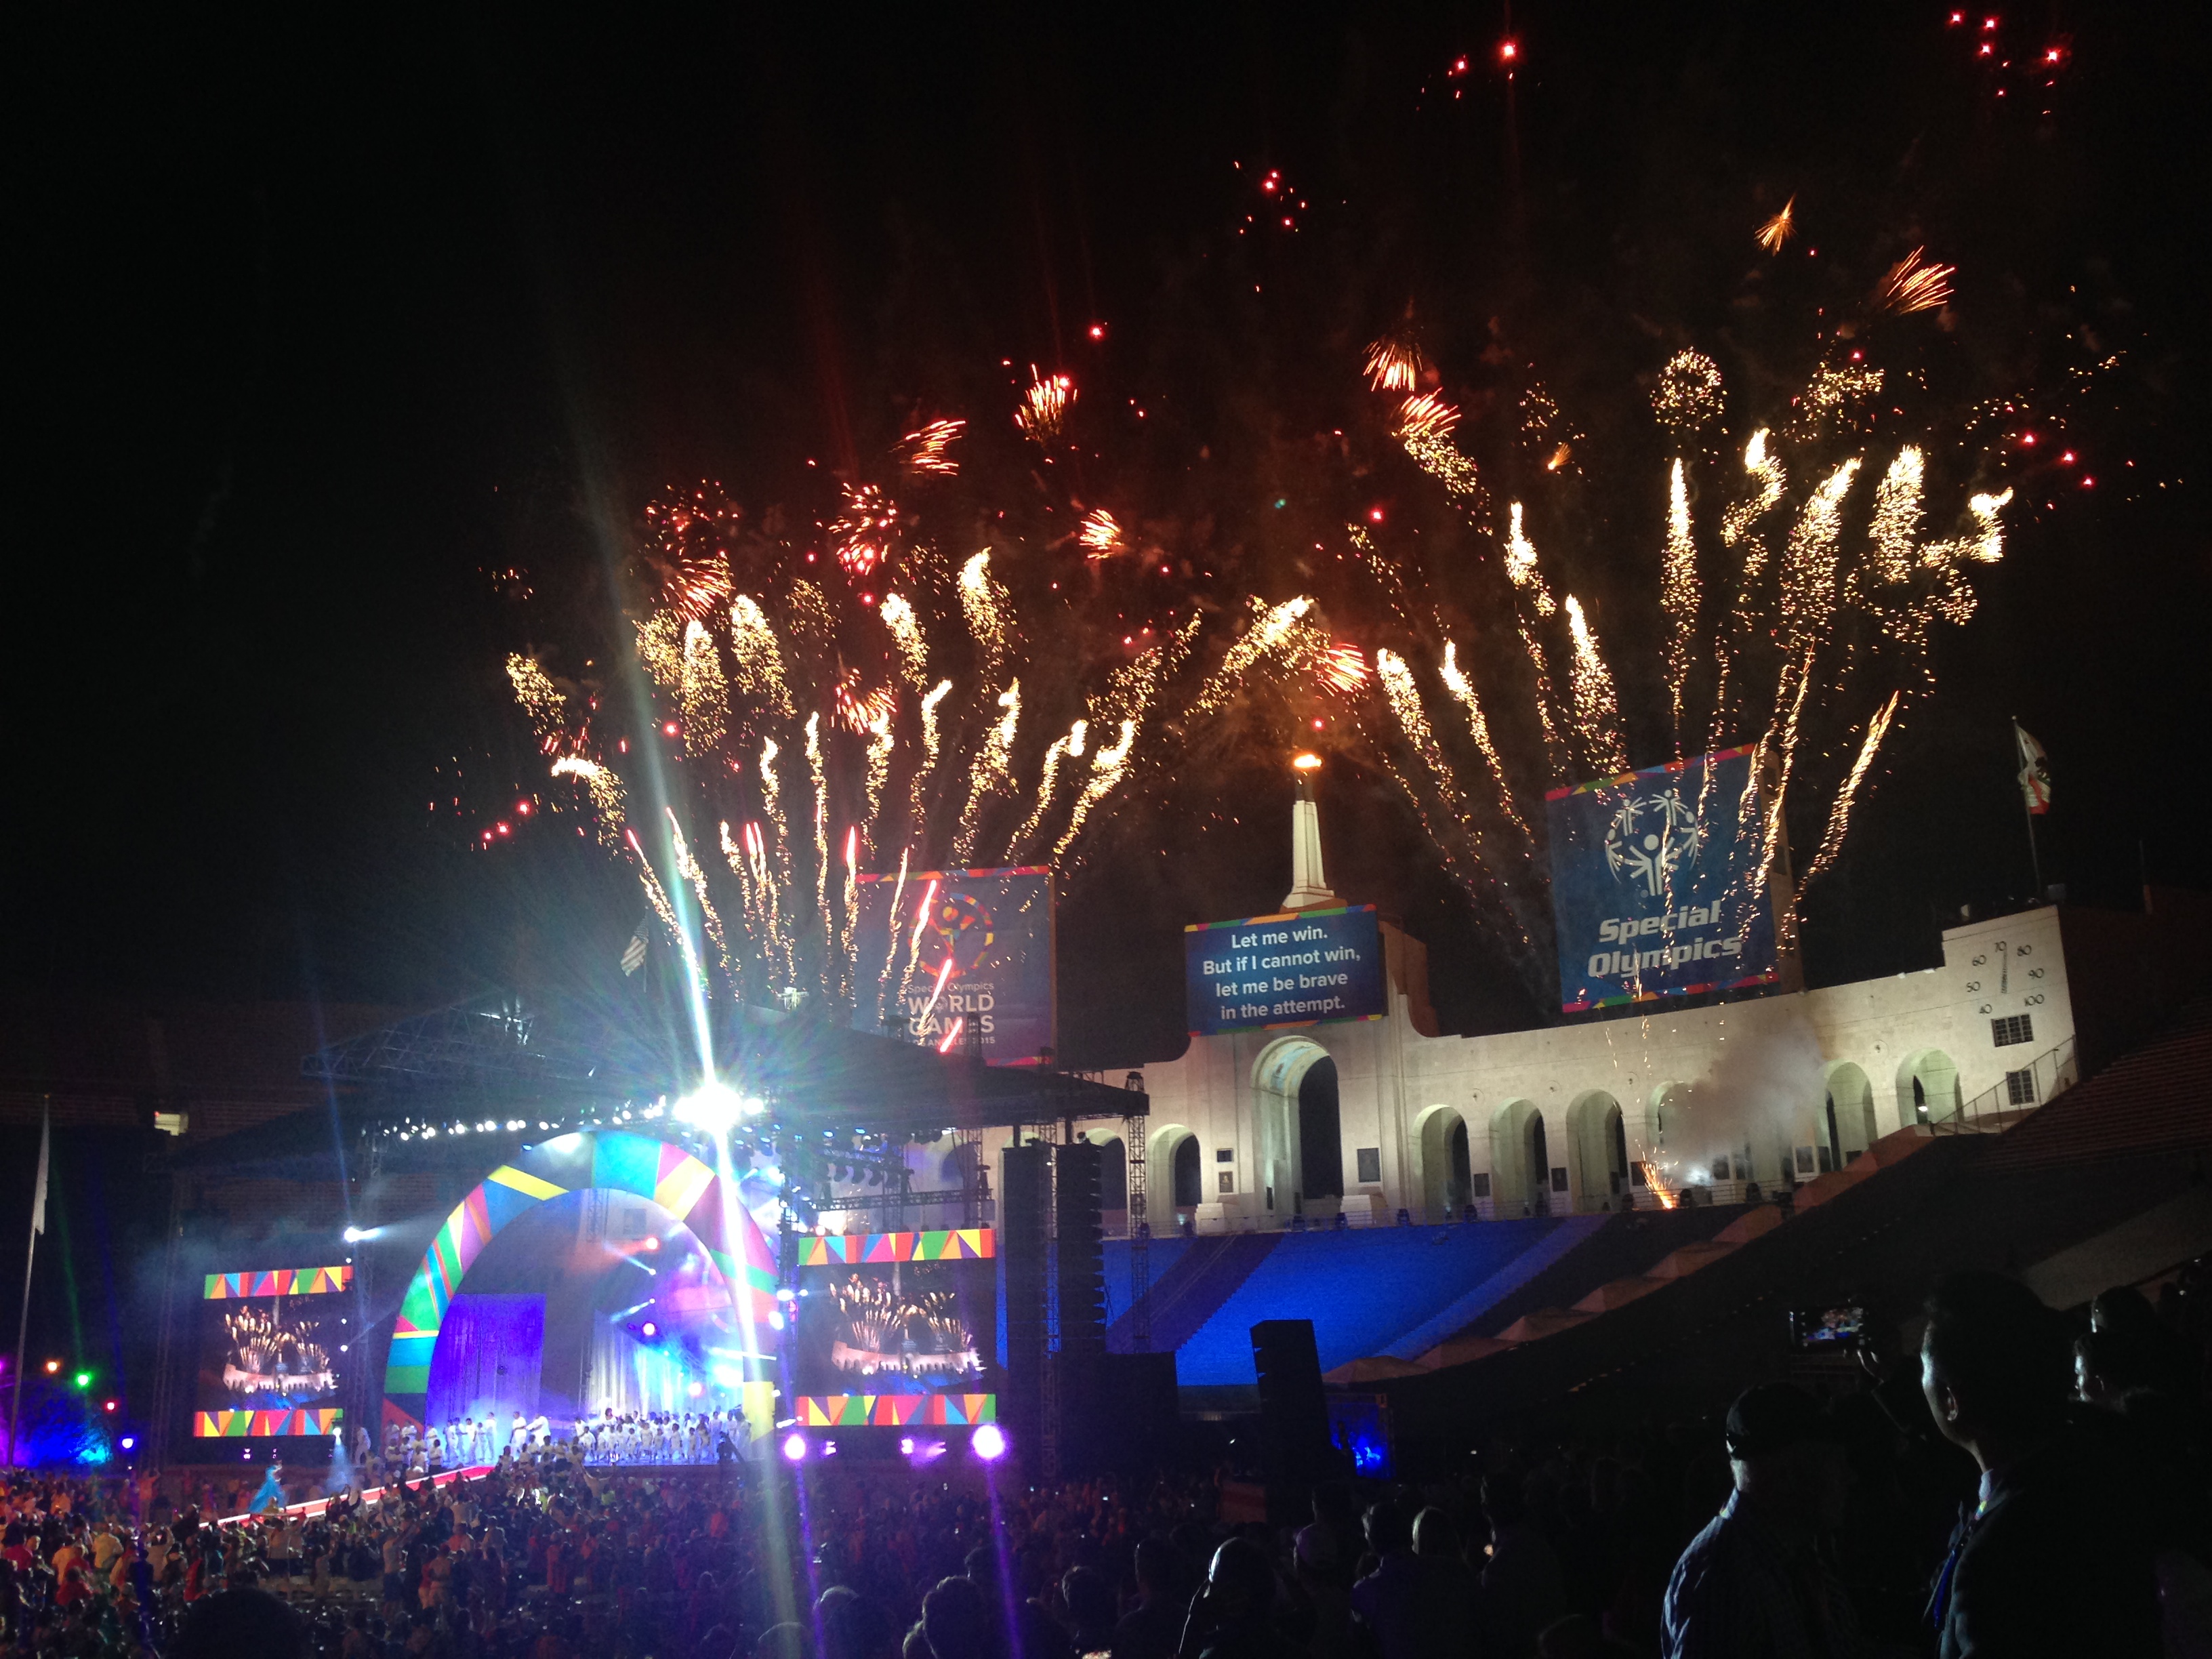 Opening ceremony fireworks